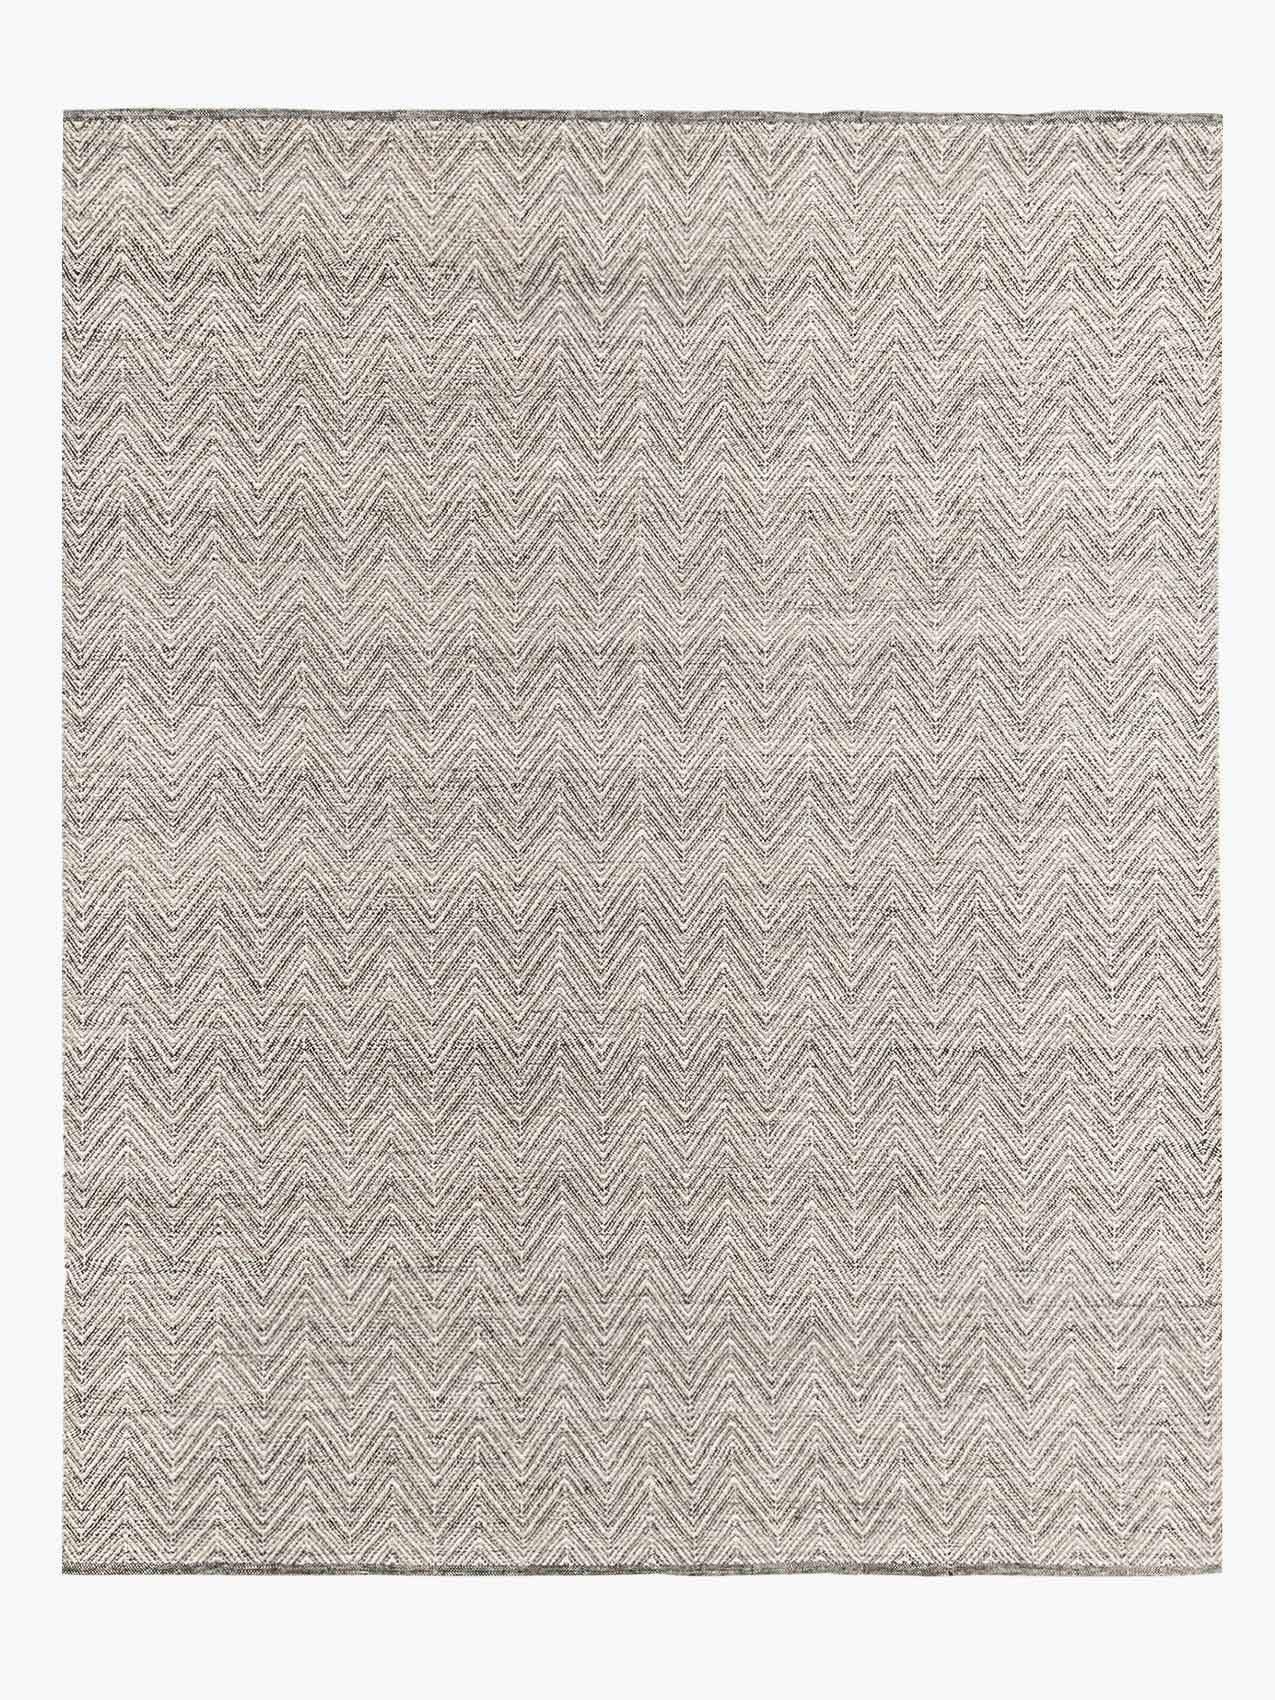 For Sale: Beige (Sand) Ben Soleimani Ceyah Rug– Hand-woven Plush Textured Wool + Linen Charcoal 8'x10'